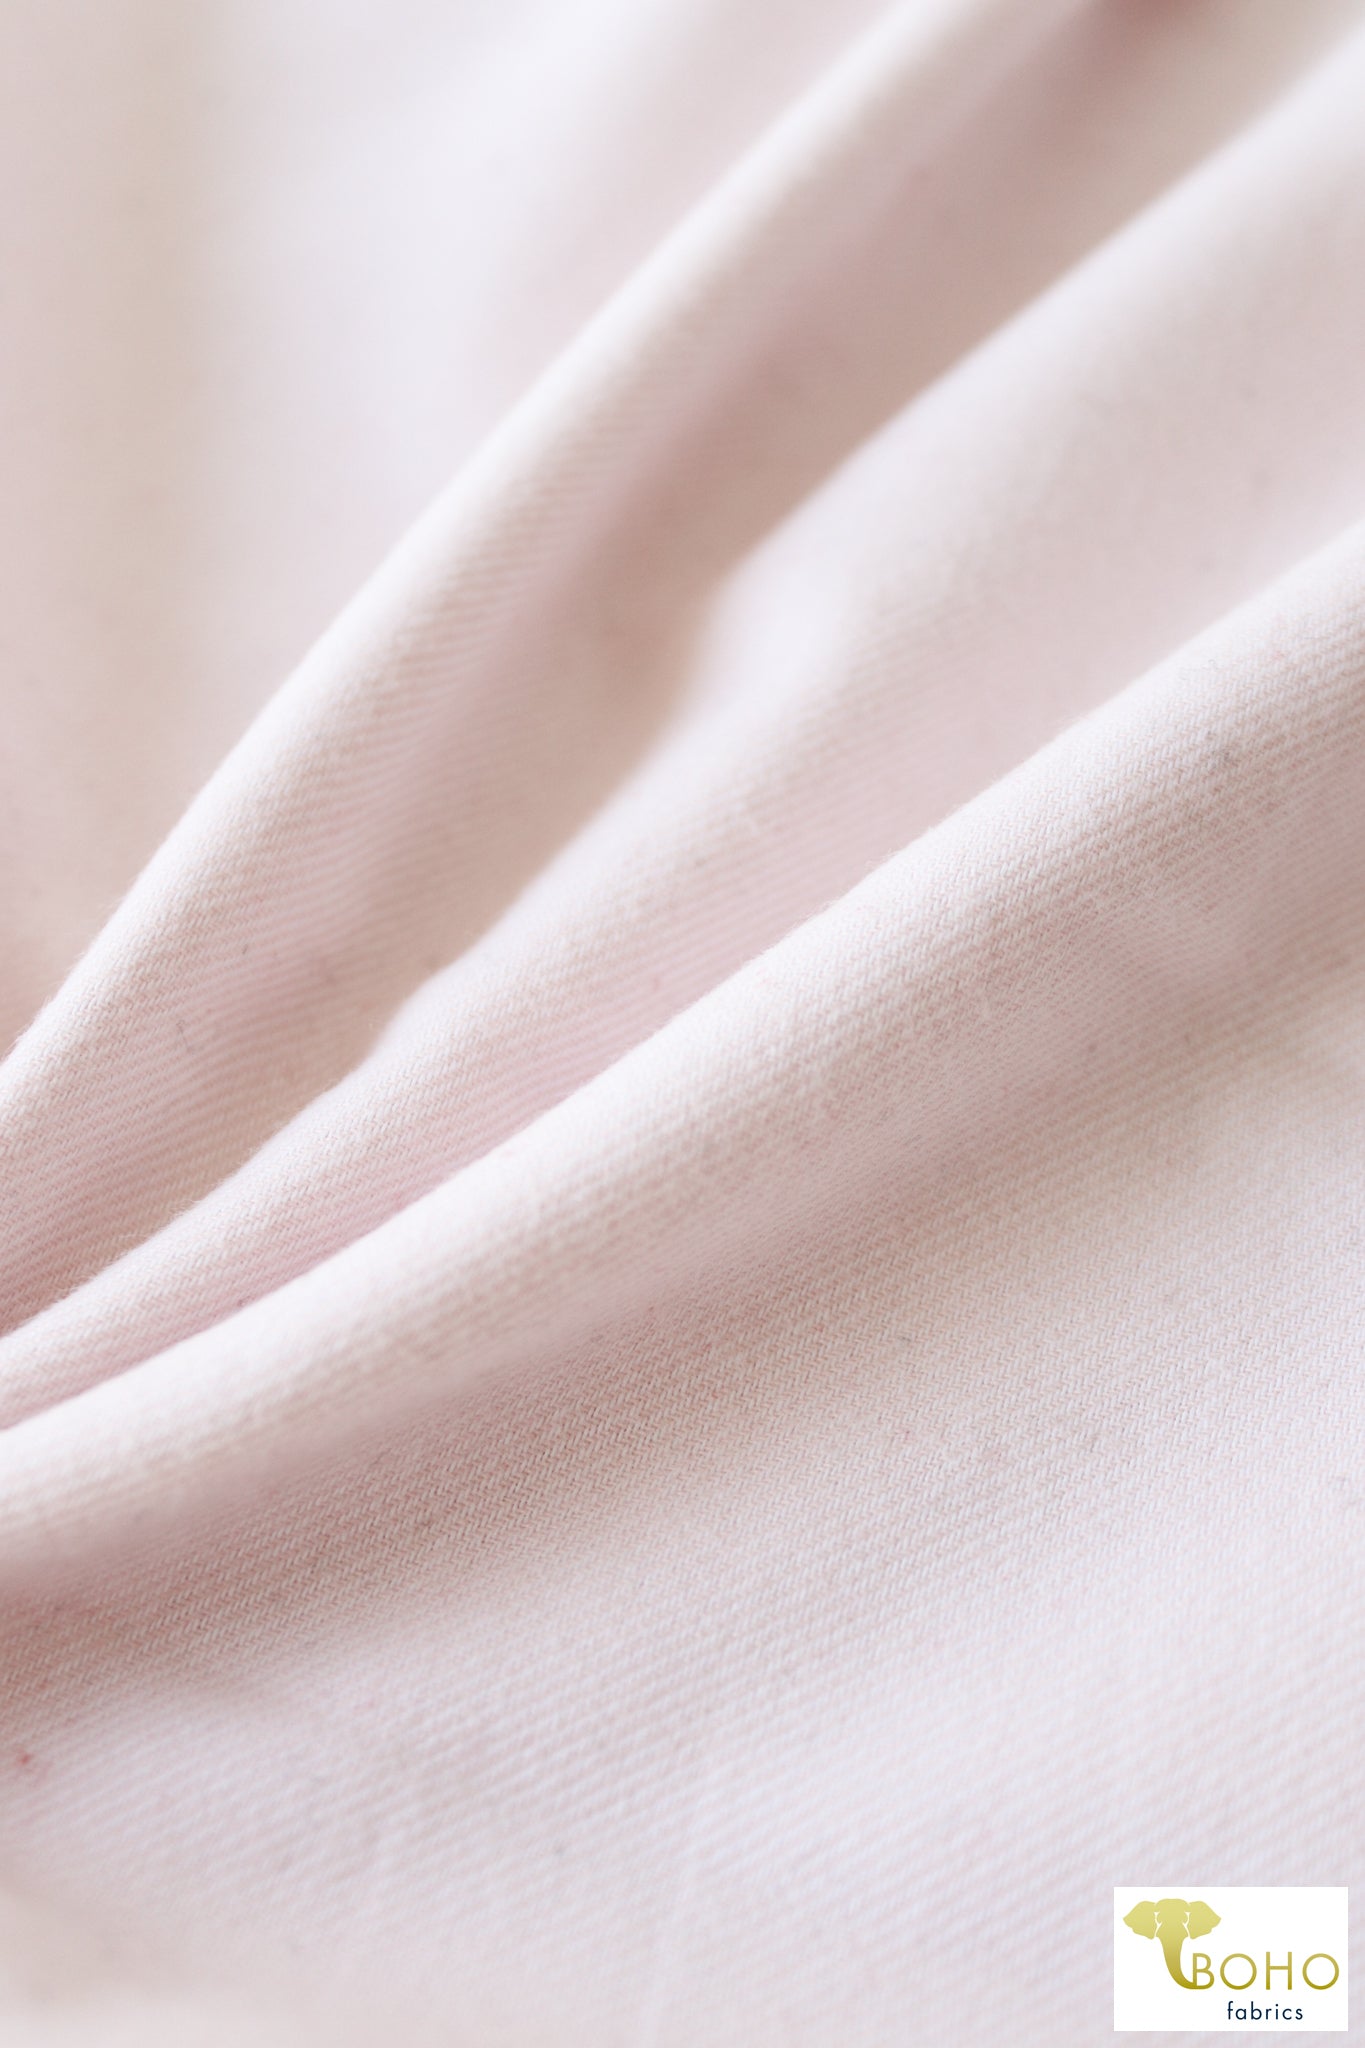 Off-White Brushed Twill, Woven Fabric. WVS-307-WHT - Boho Fabrics